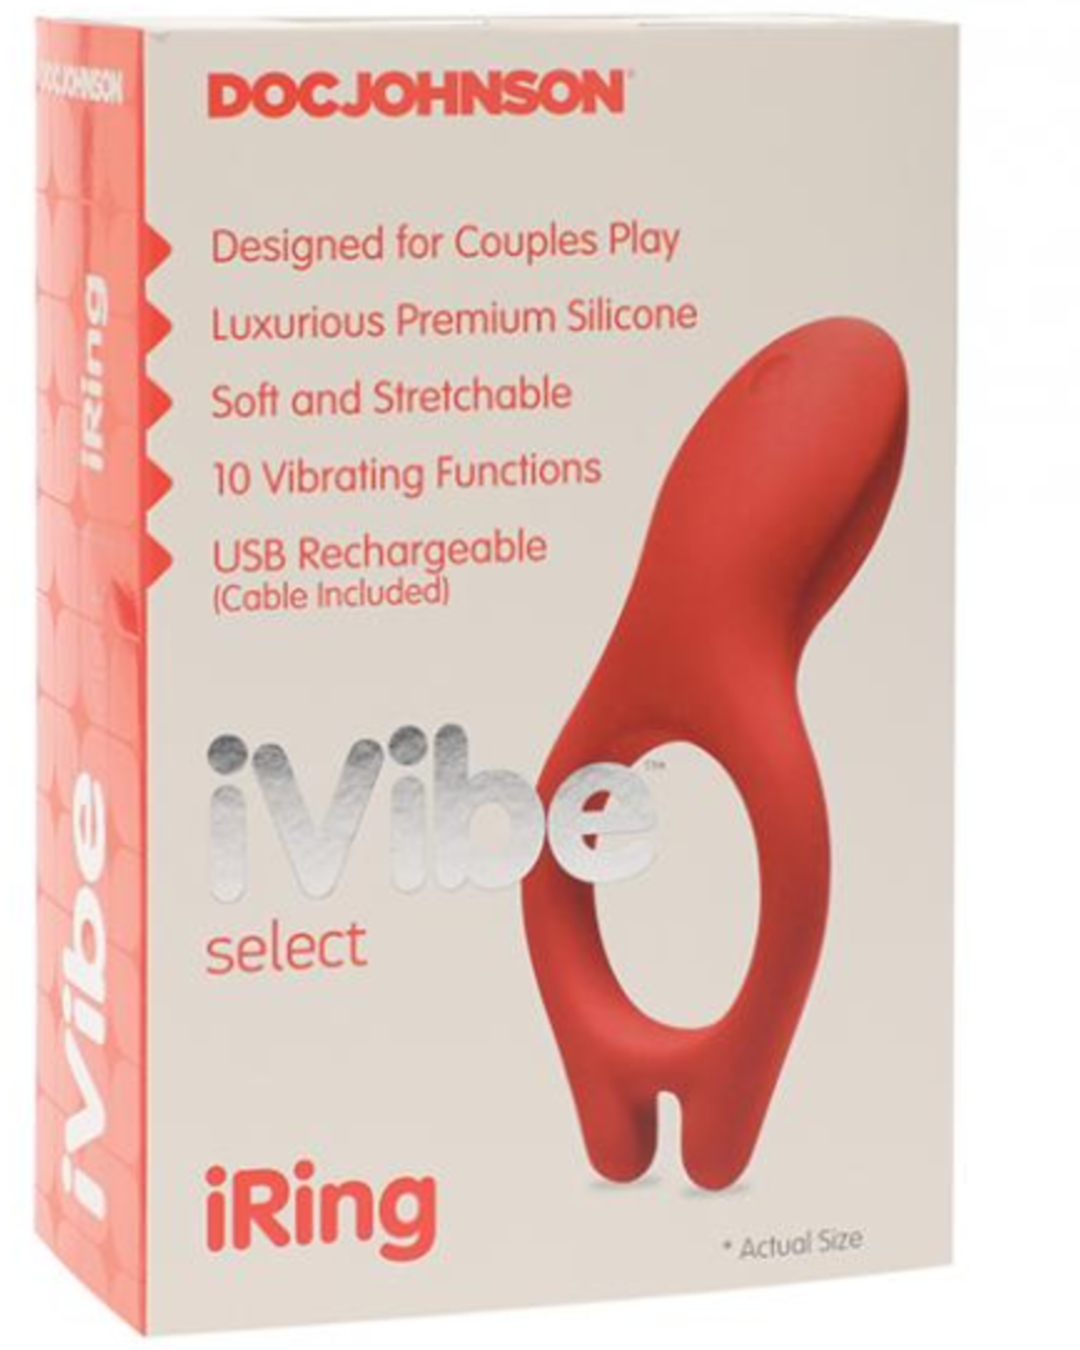 Ivibe Select Iring Vibrating Cock Ring by Doc Johnson - Orange box